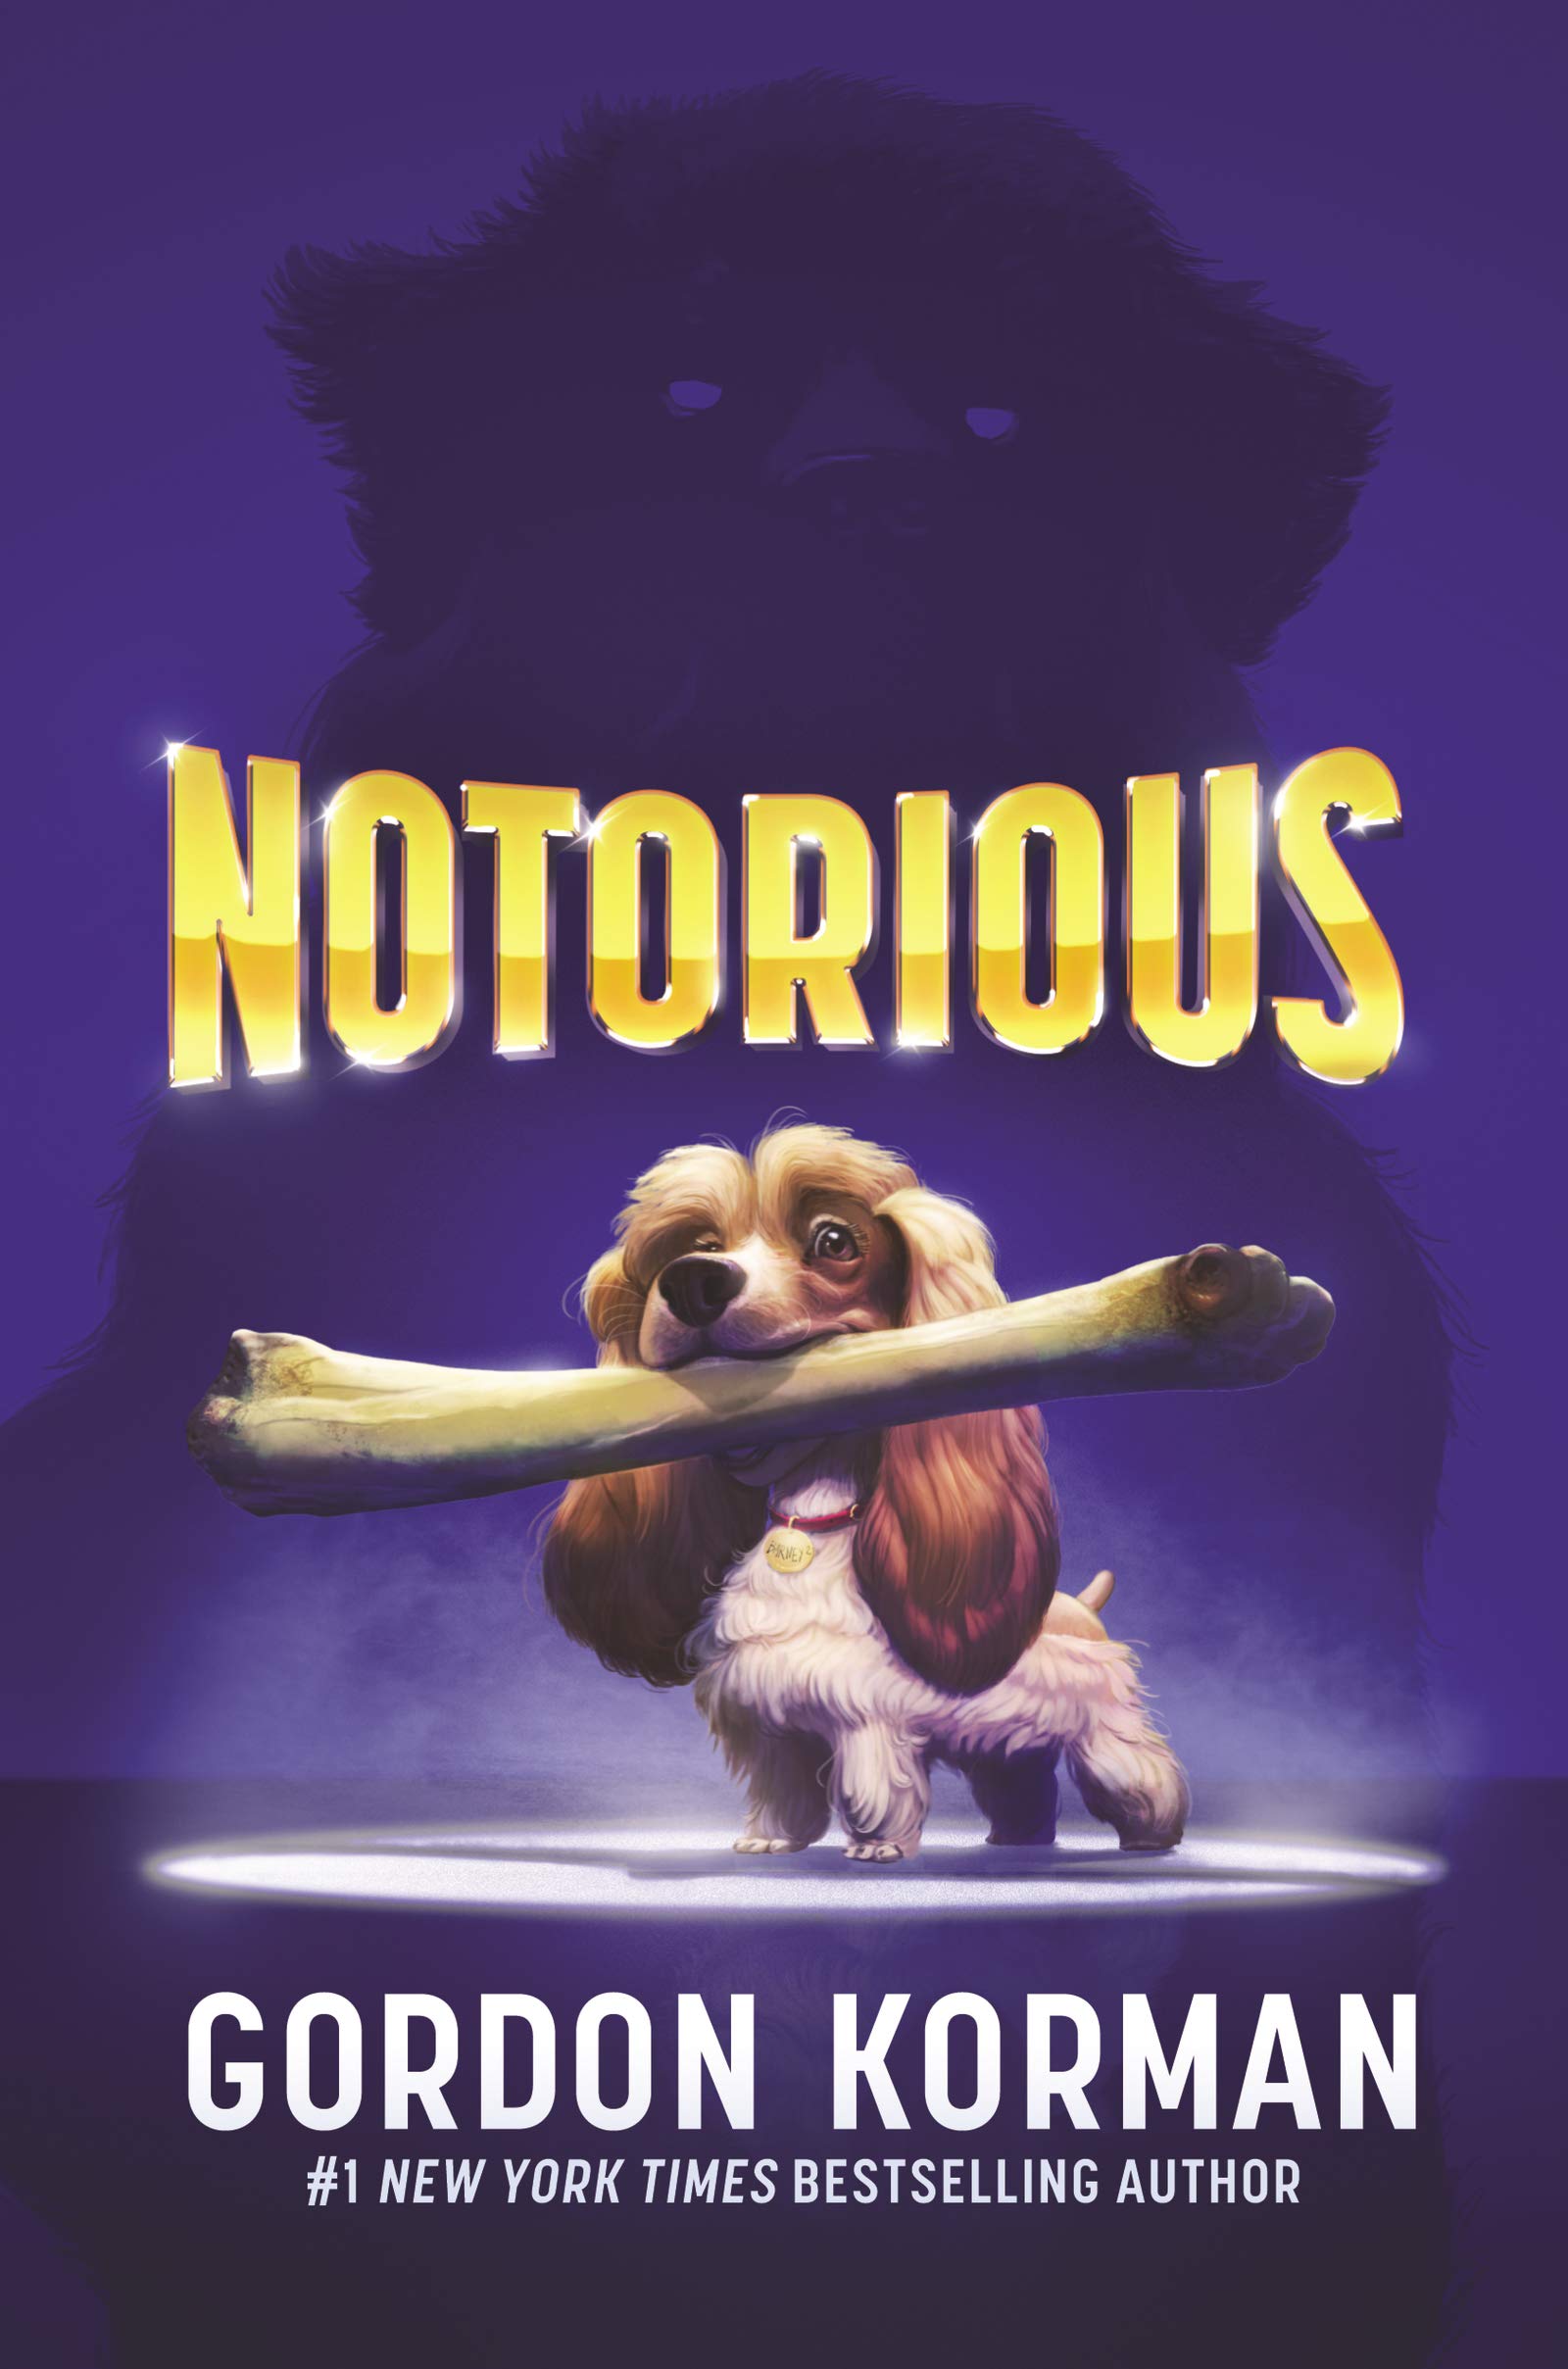 Notorious by Gordon Korman